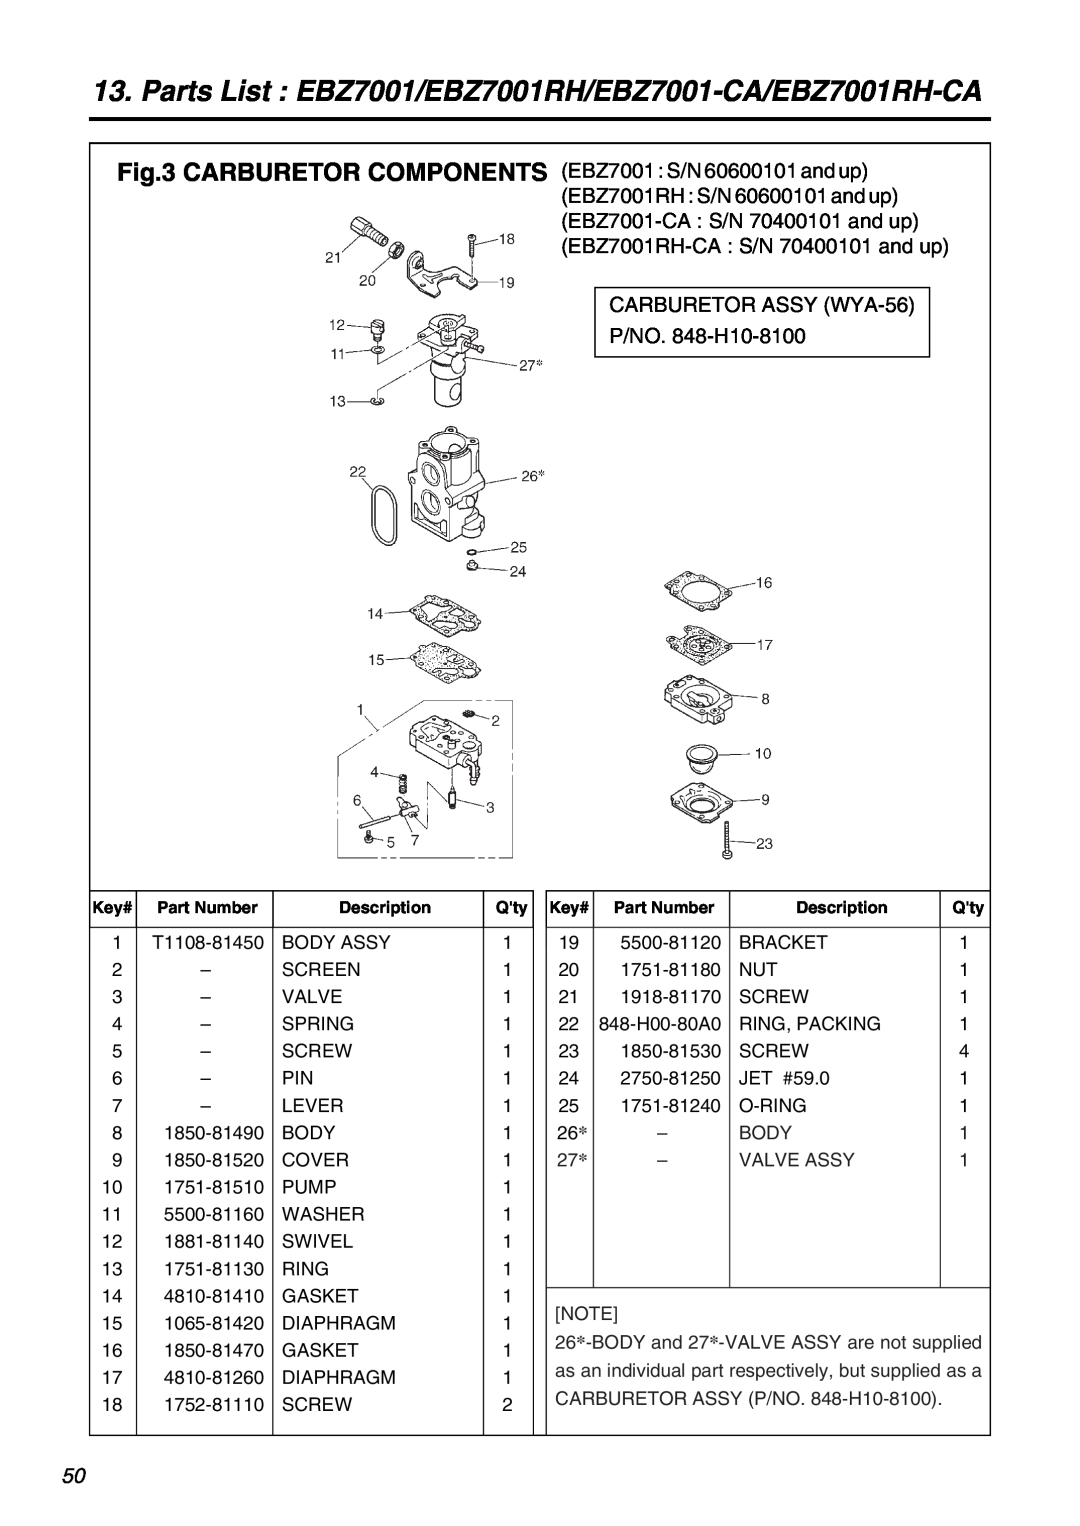 RedMax manual CARBURETOR ASSY WYA-56 P/NO. 848-H10-8100, Parts List EBZ7001/EBZ7001RH/EBZ7001-CA/EBZ7001RH-CA 